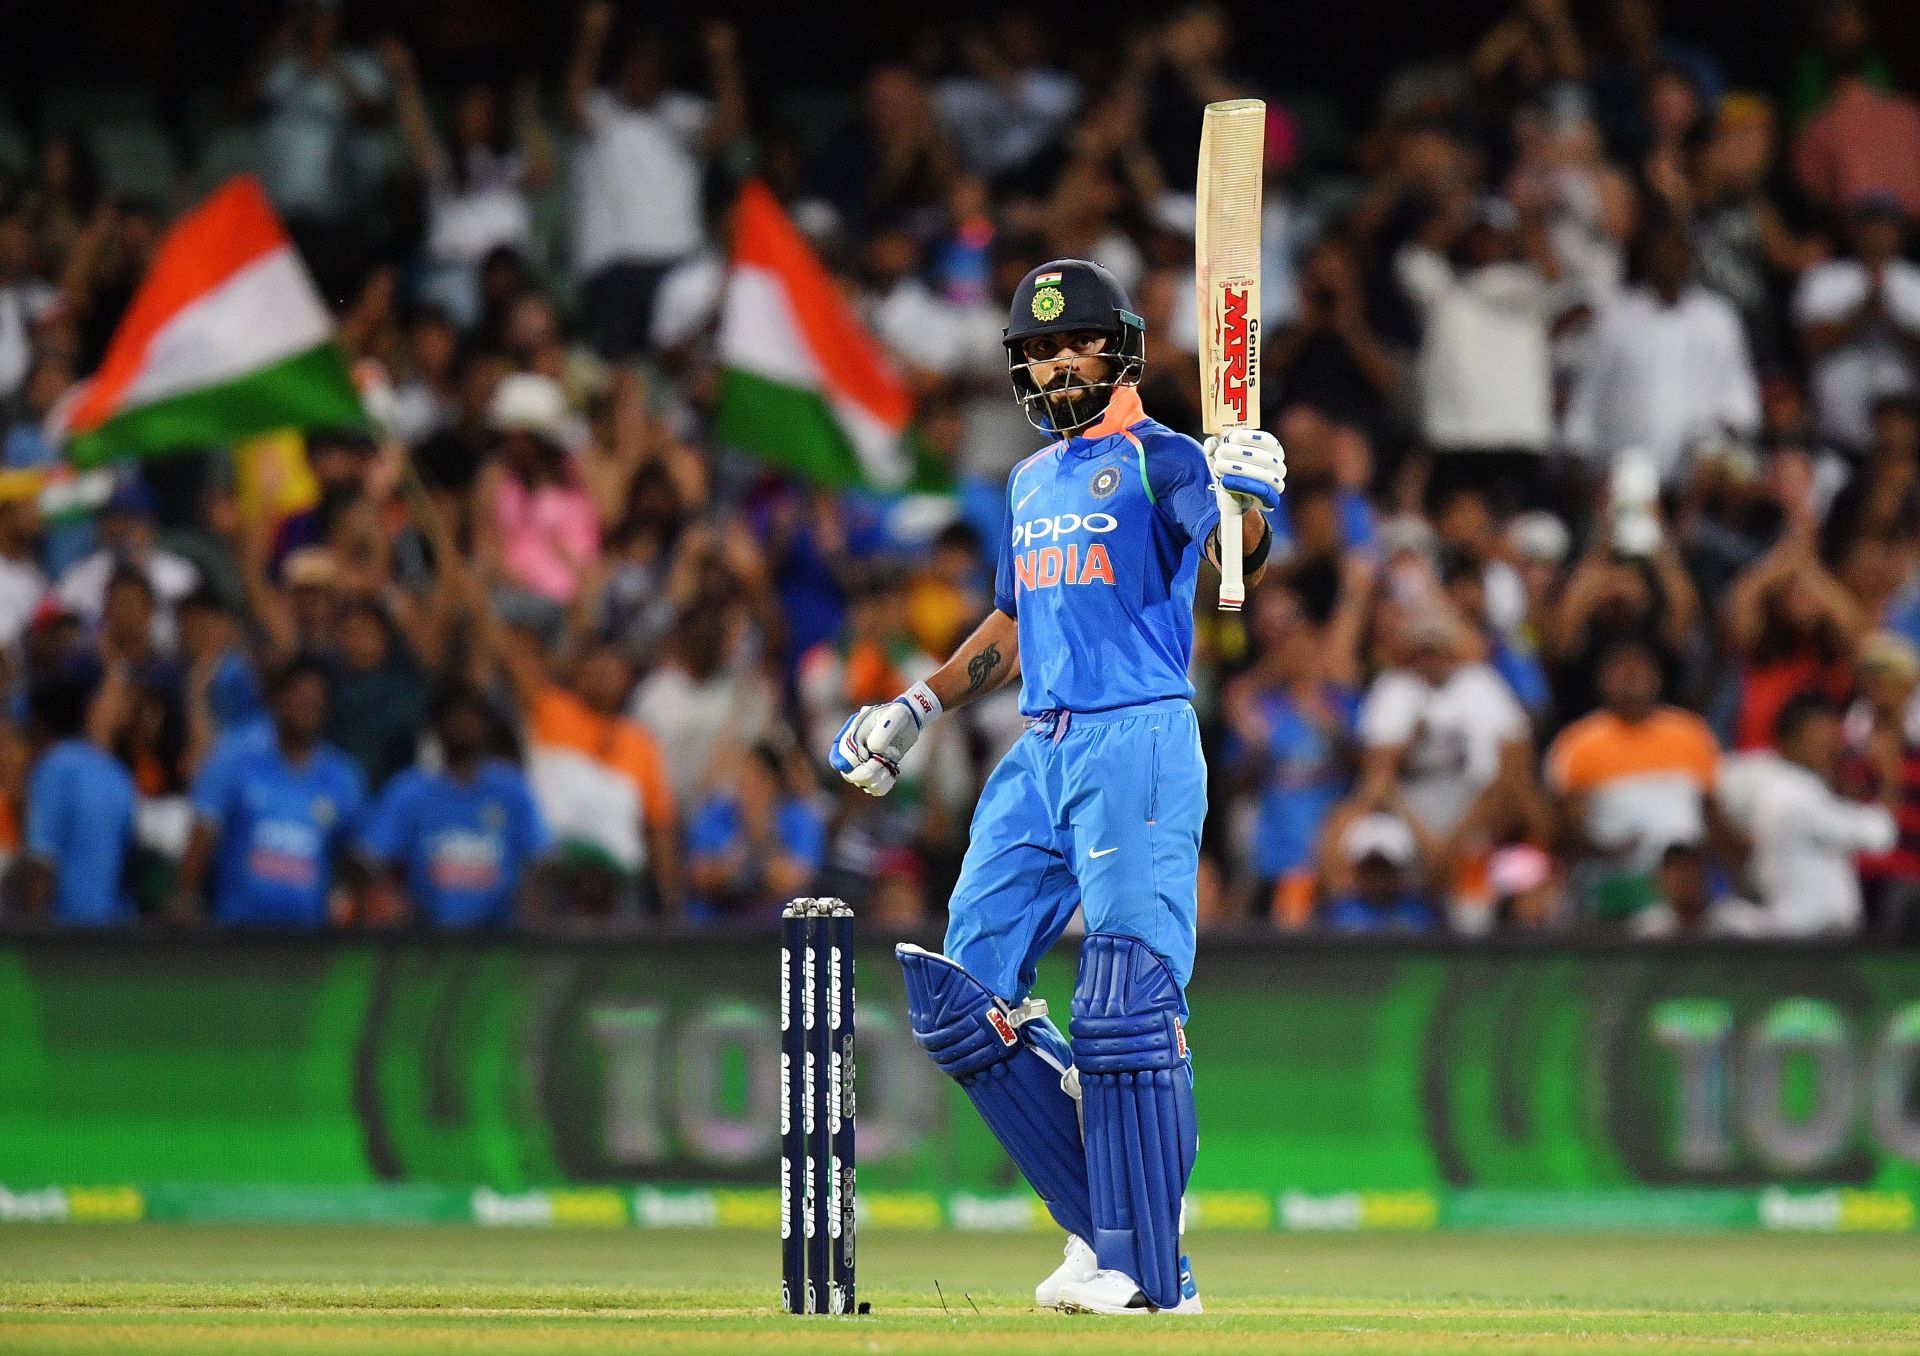 Australia v India - ODI: Game 2 (Image: Getty)